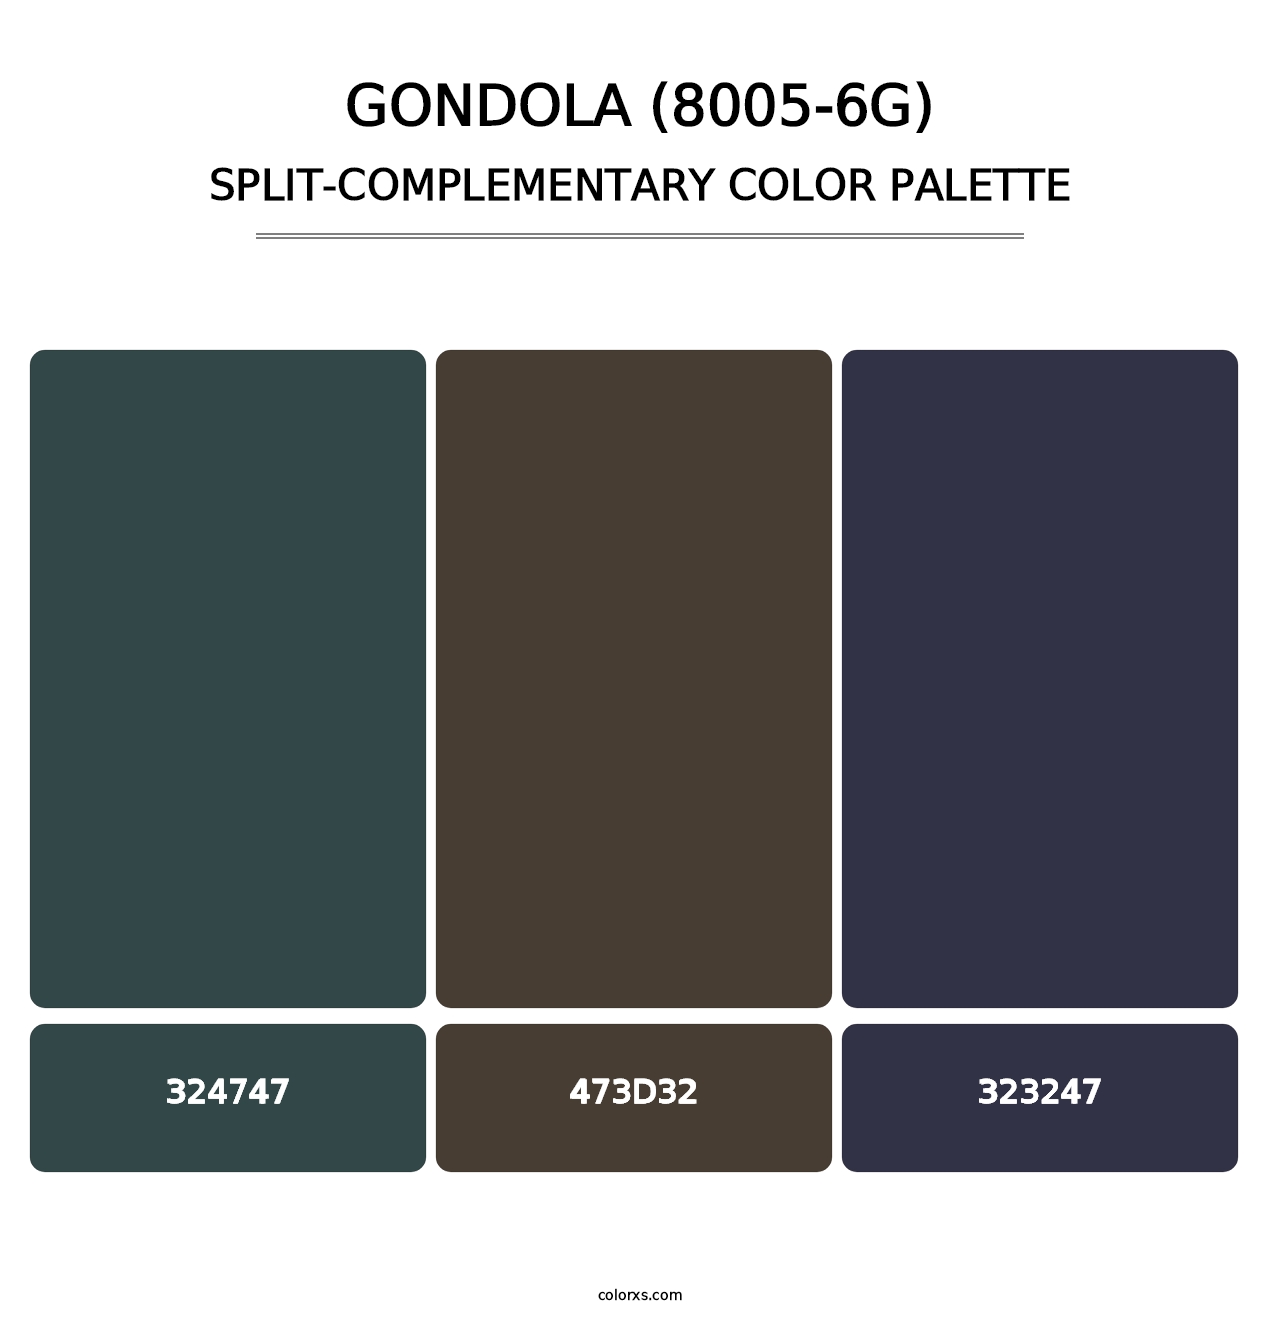 Gondola (8005-6G) - Split-Complementary Color Palette